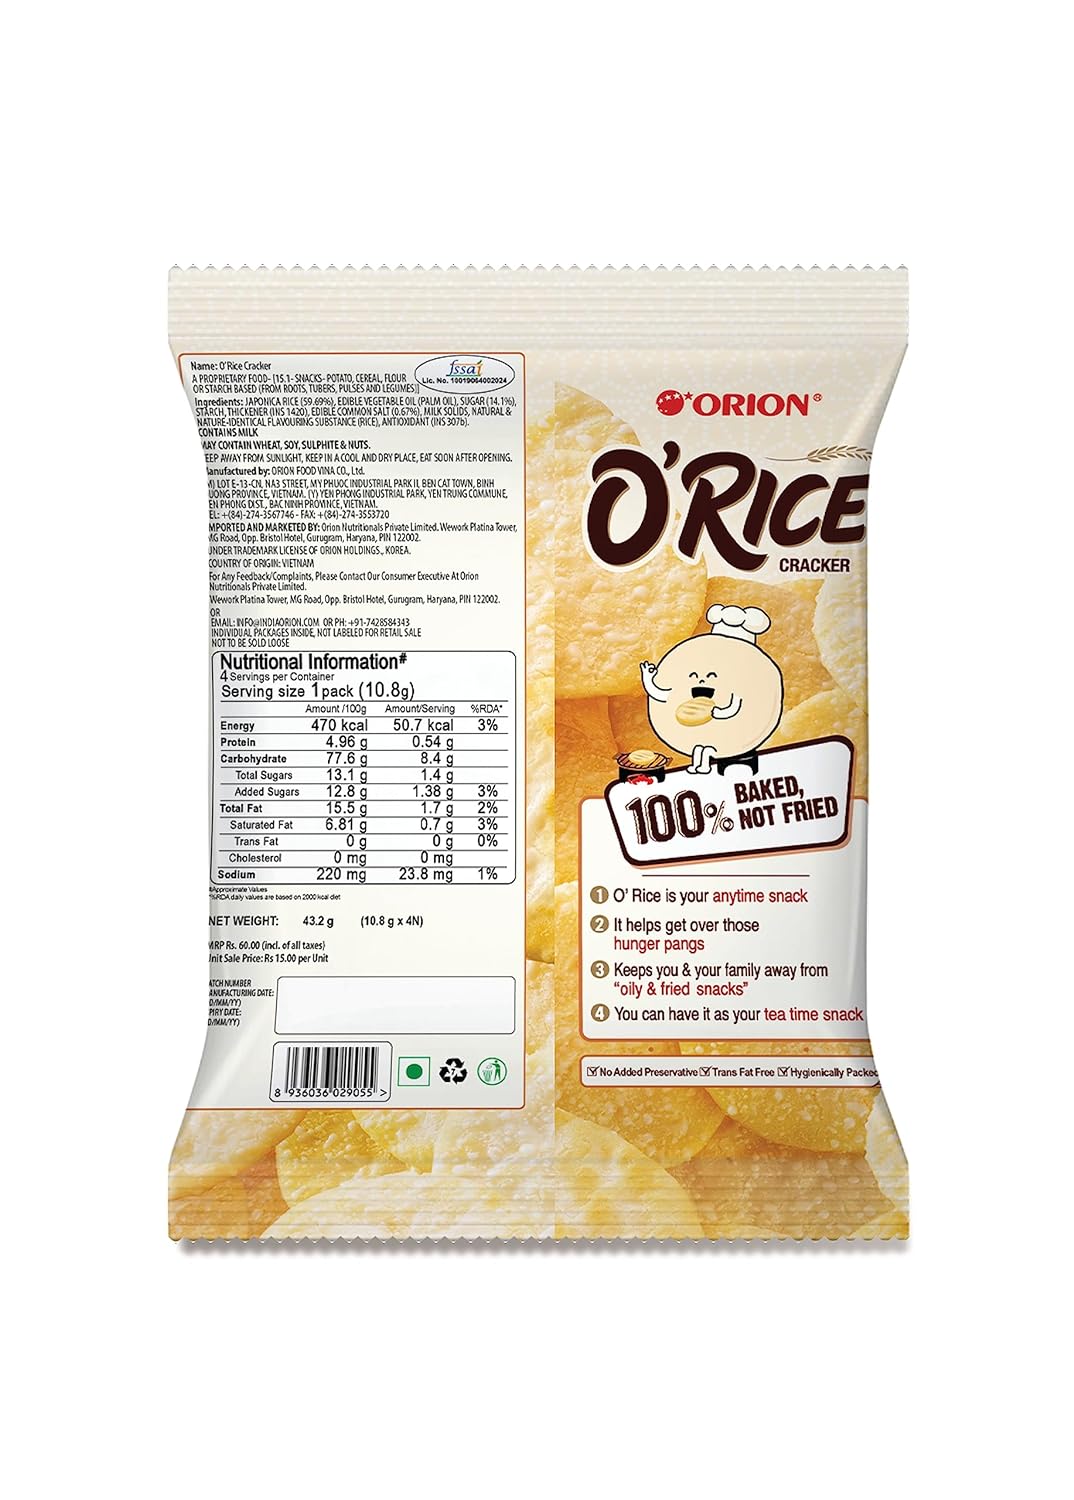 Orion/ O'Rice Cracker/ 100 Percent Baked (43.2gm)